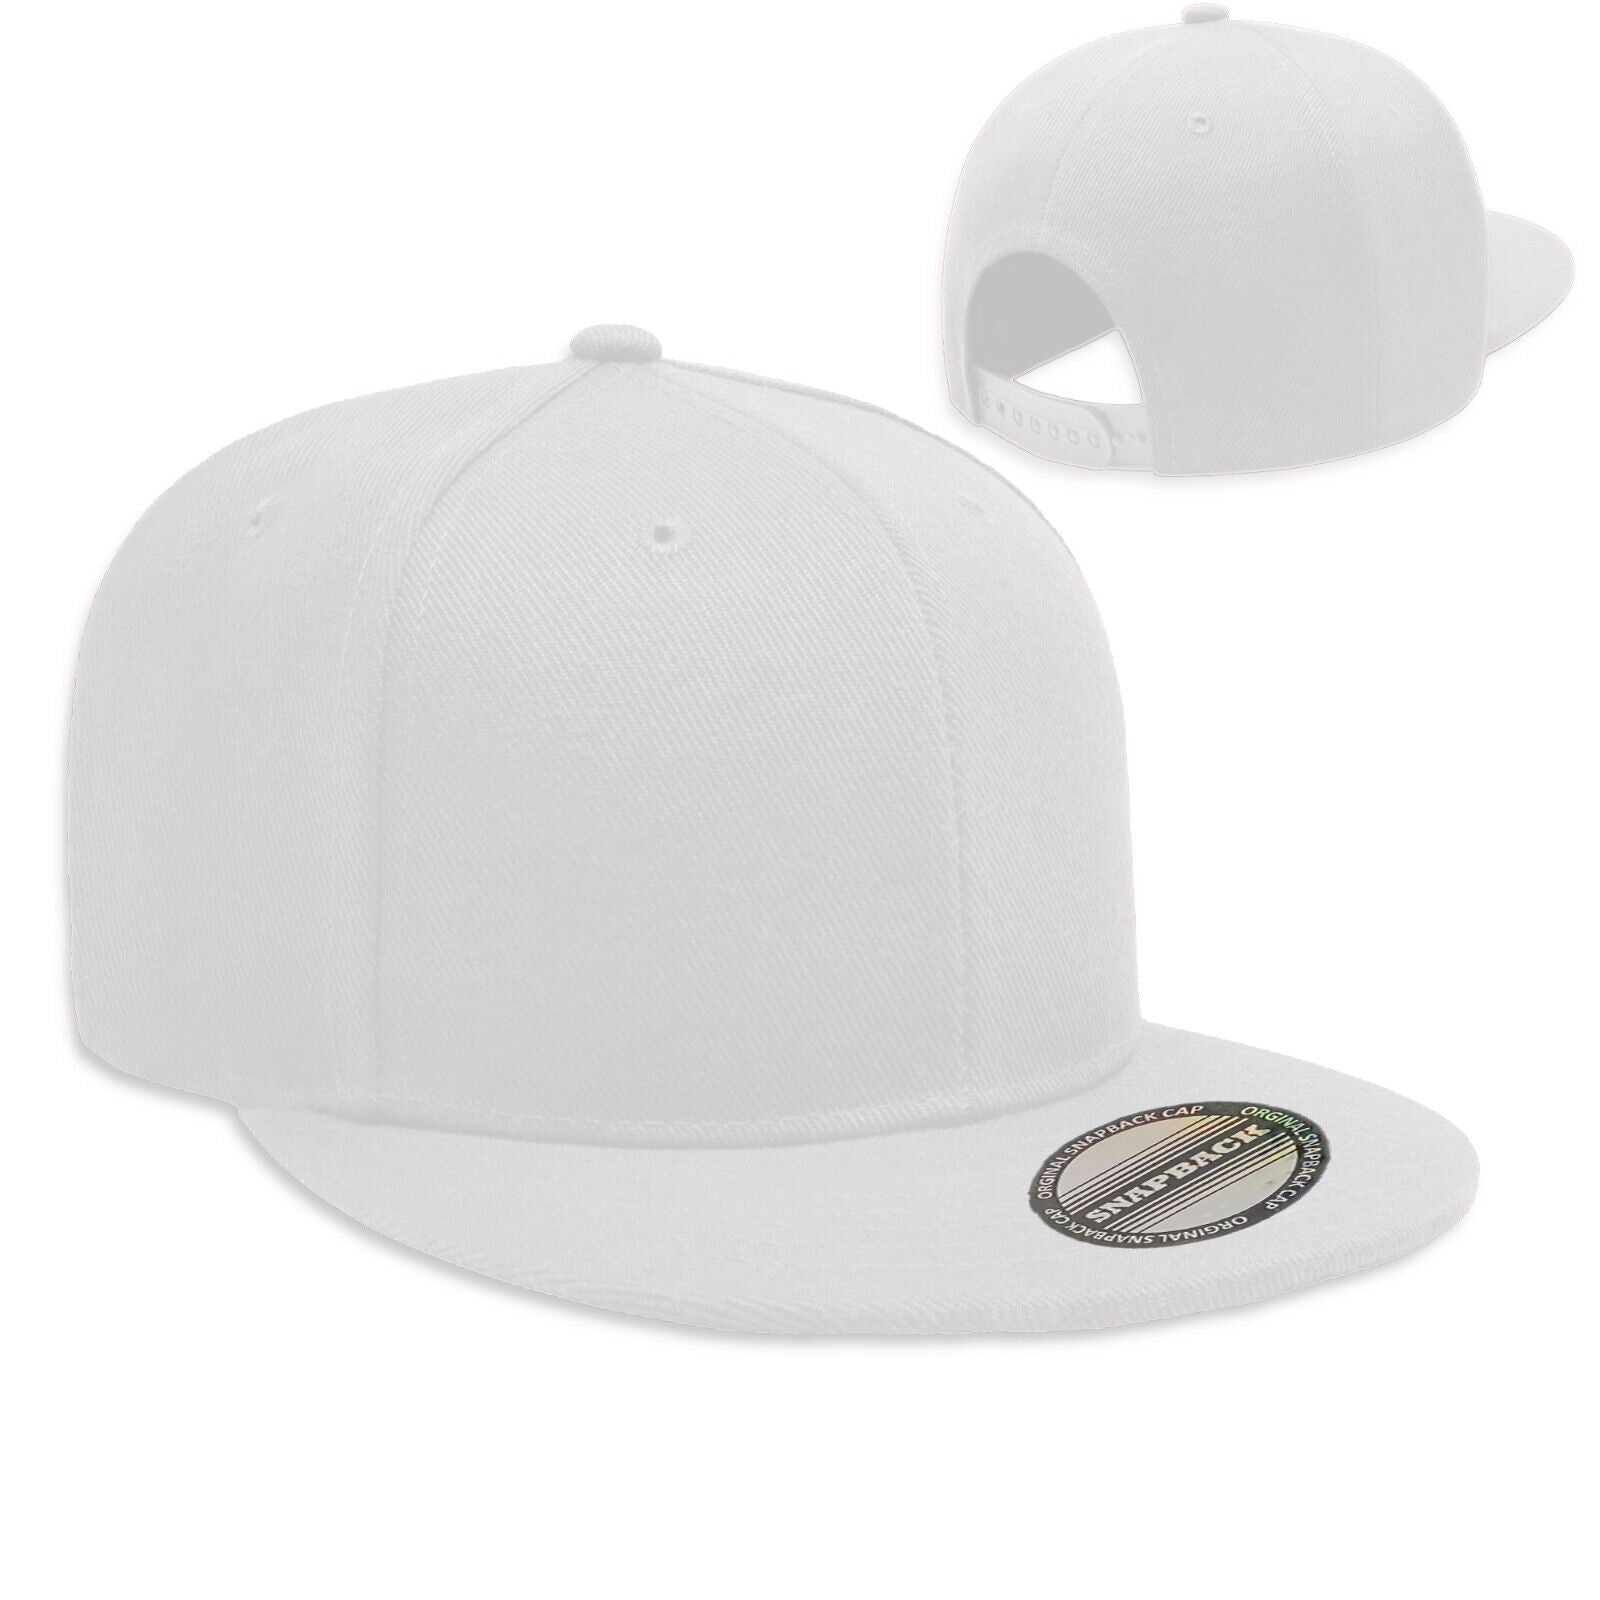 15 Pack Snapback Hats for Men Hip Hop Style Hats Solid Baseball Hats Adjustable Snapback Cap Flat Brim Baseball Caps